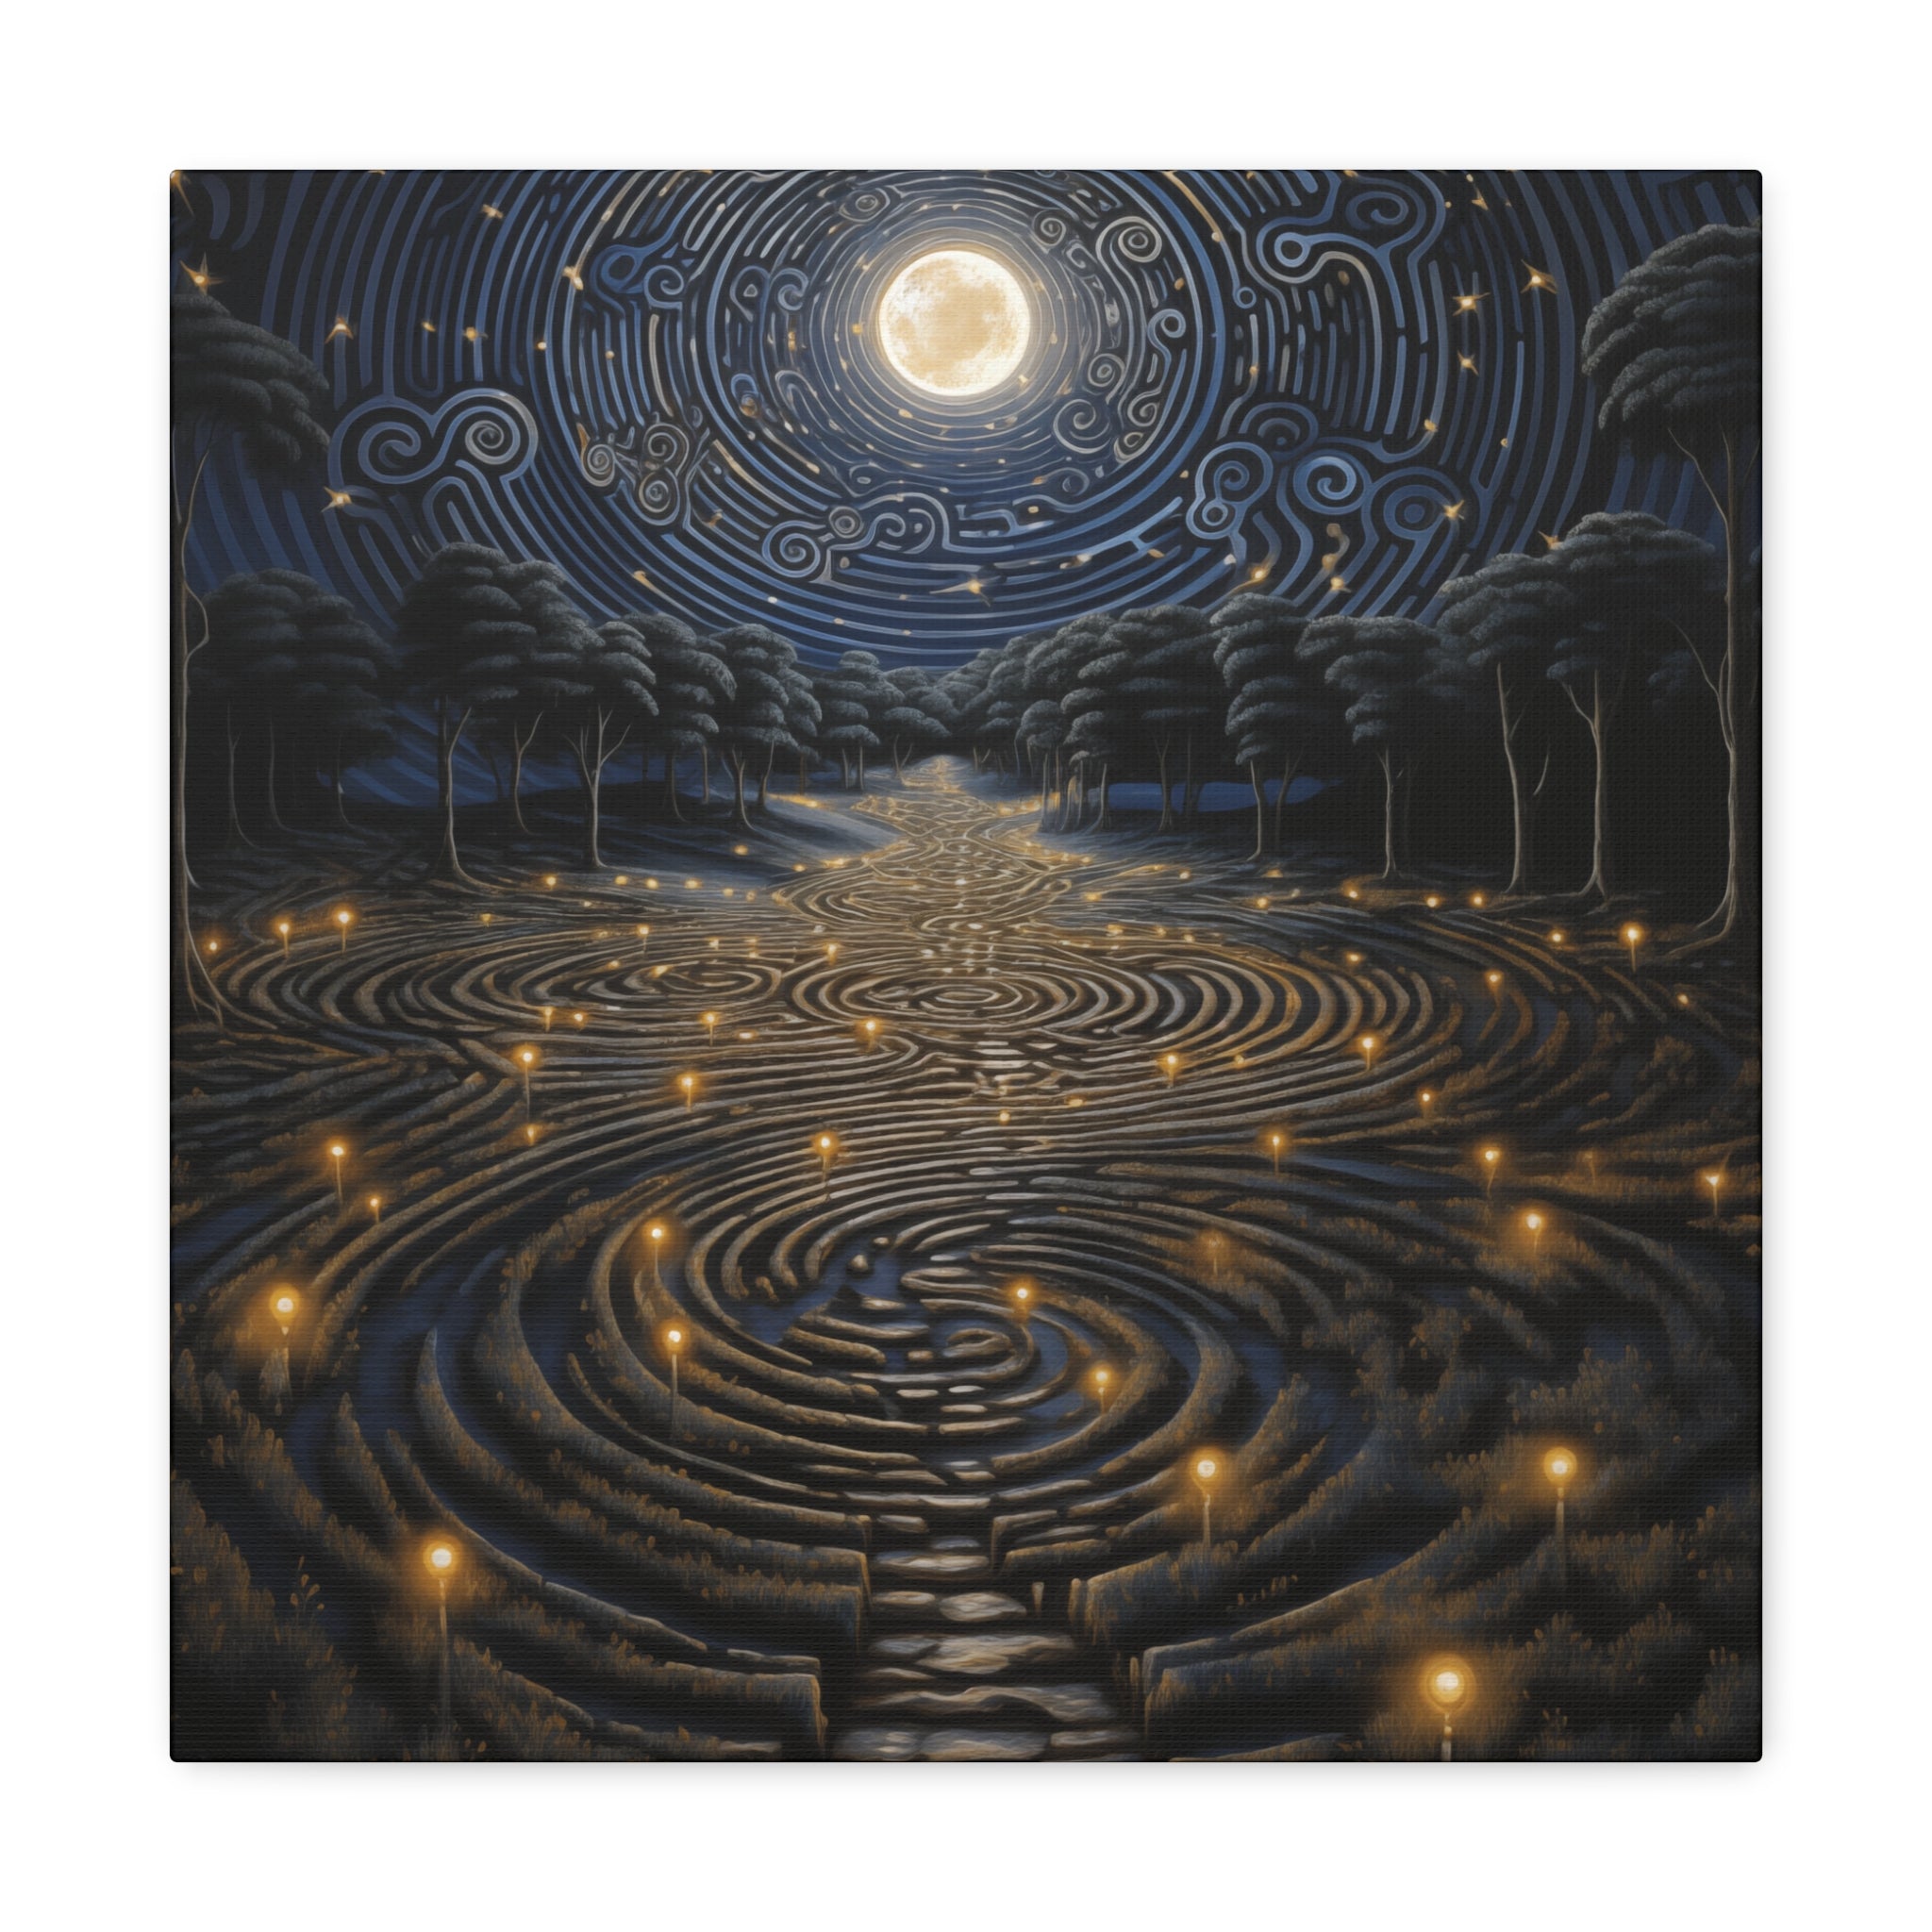 Lunar Labyrinth